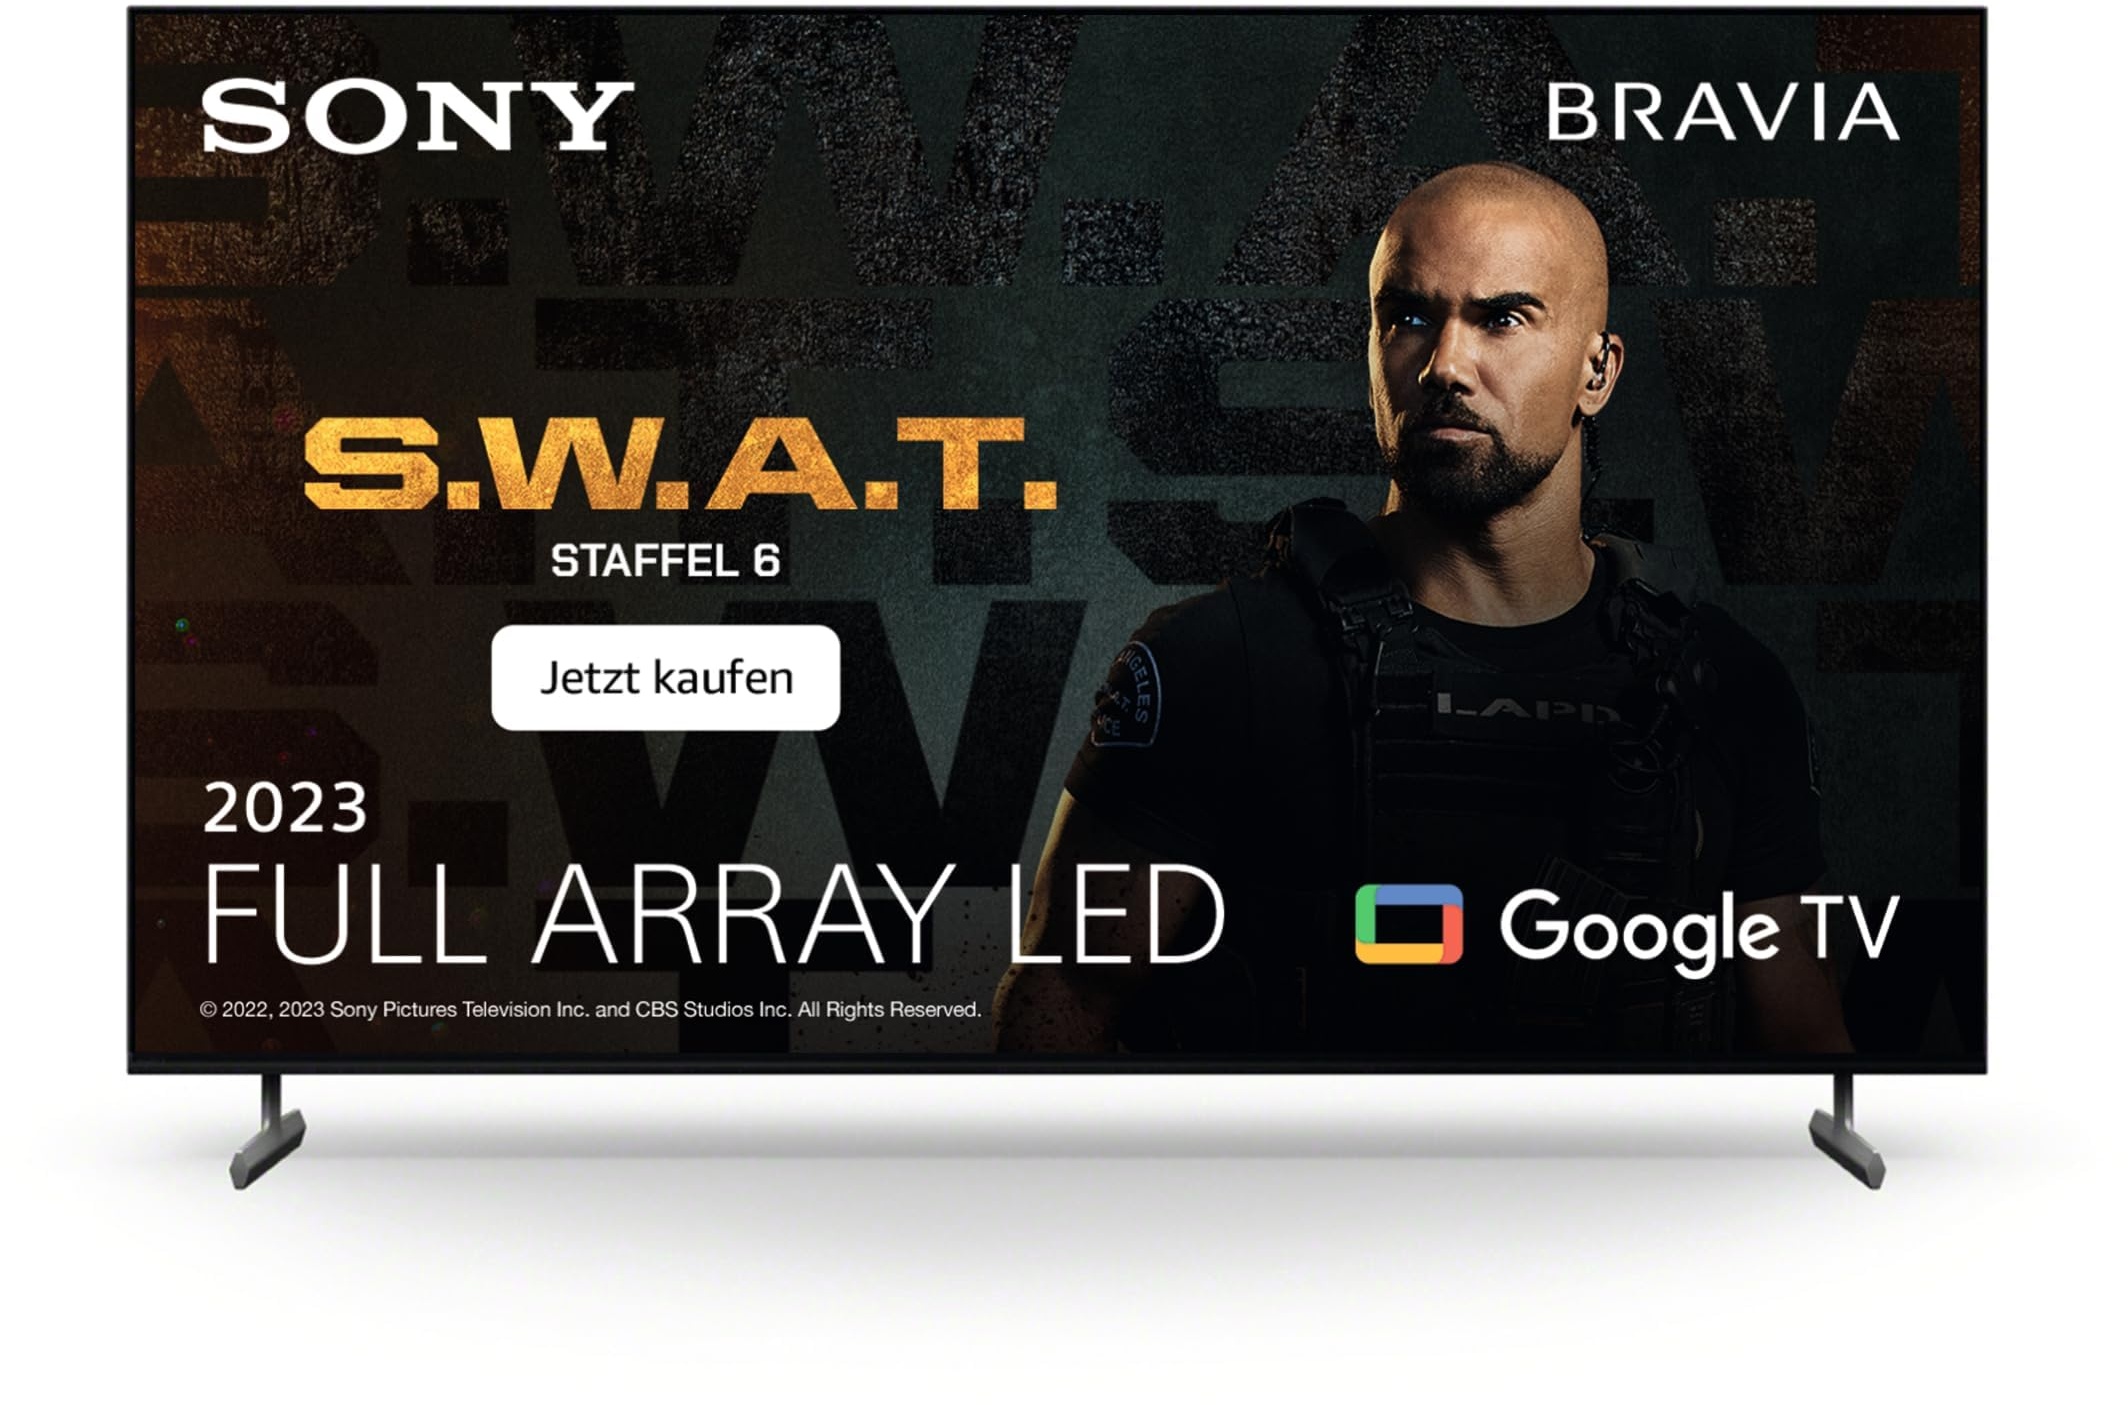 Sony BRAVIA, KD-65X85L, 65 Zoll Fernseher, Full Array LED, 4K HDR 120Hz, Google TV, Smart TV, Works with Alexa, BRAVIA CORE, TRILUMINOS PRO, HDMI 2.1, Gaming-Menü mit ALLM + VRR